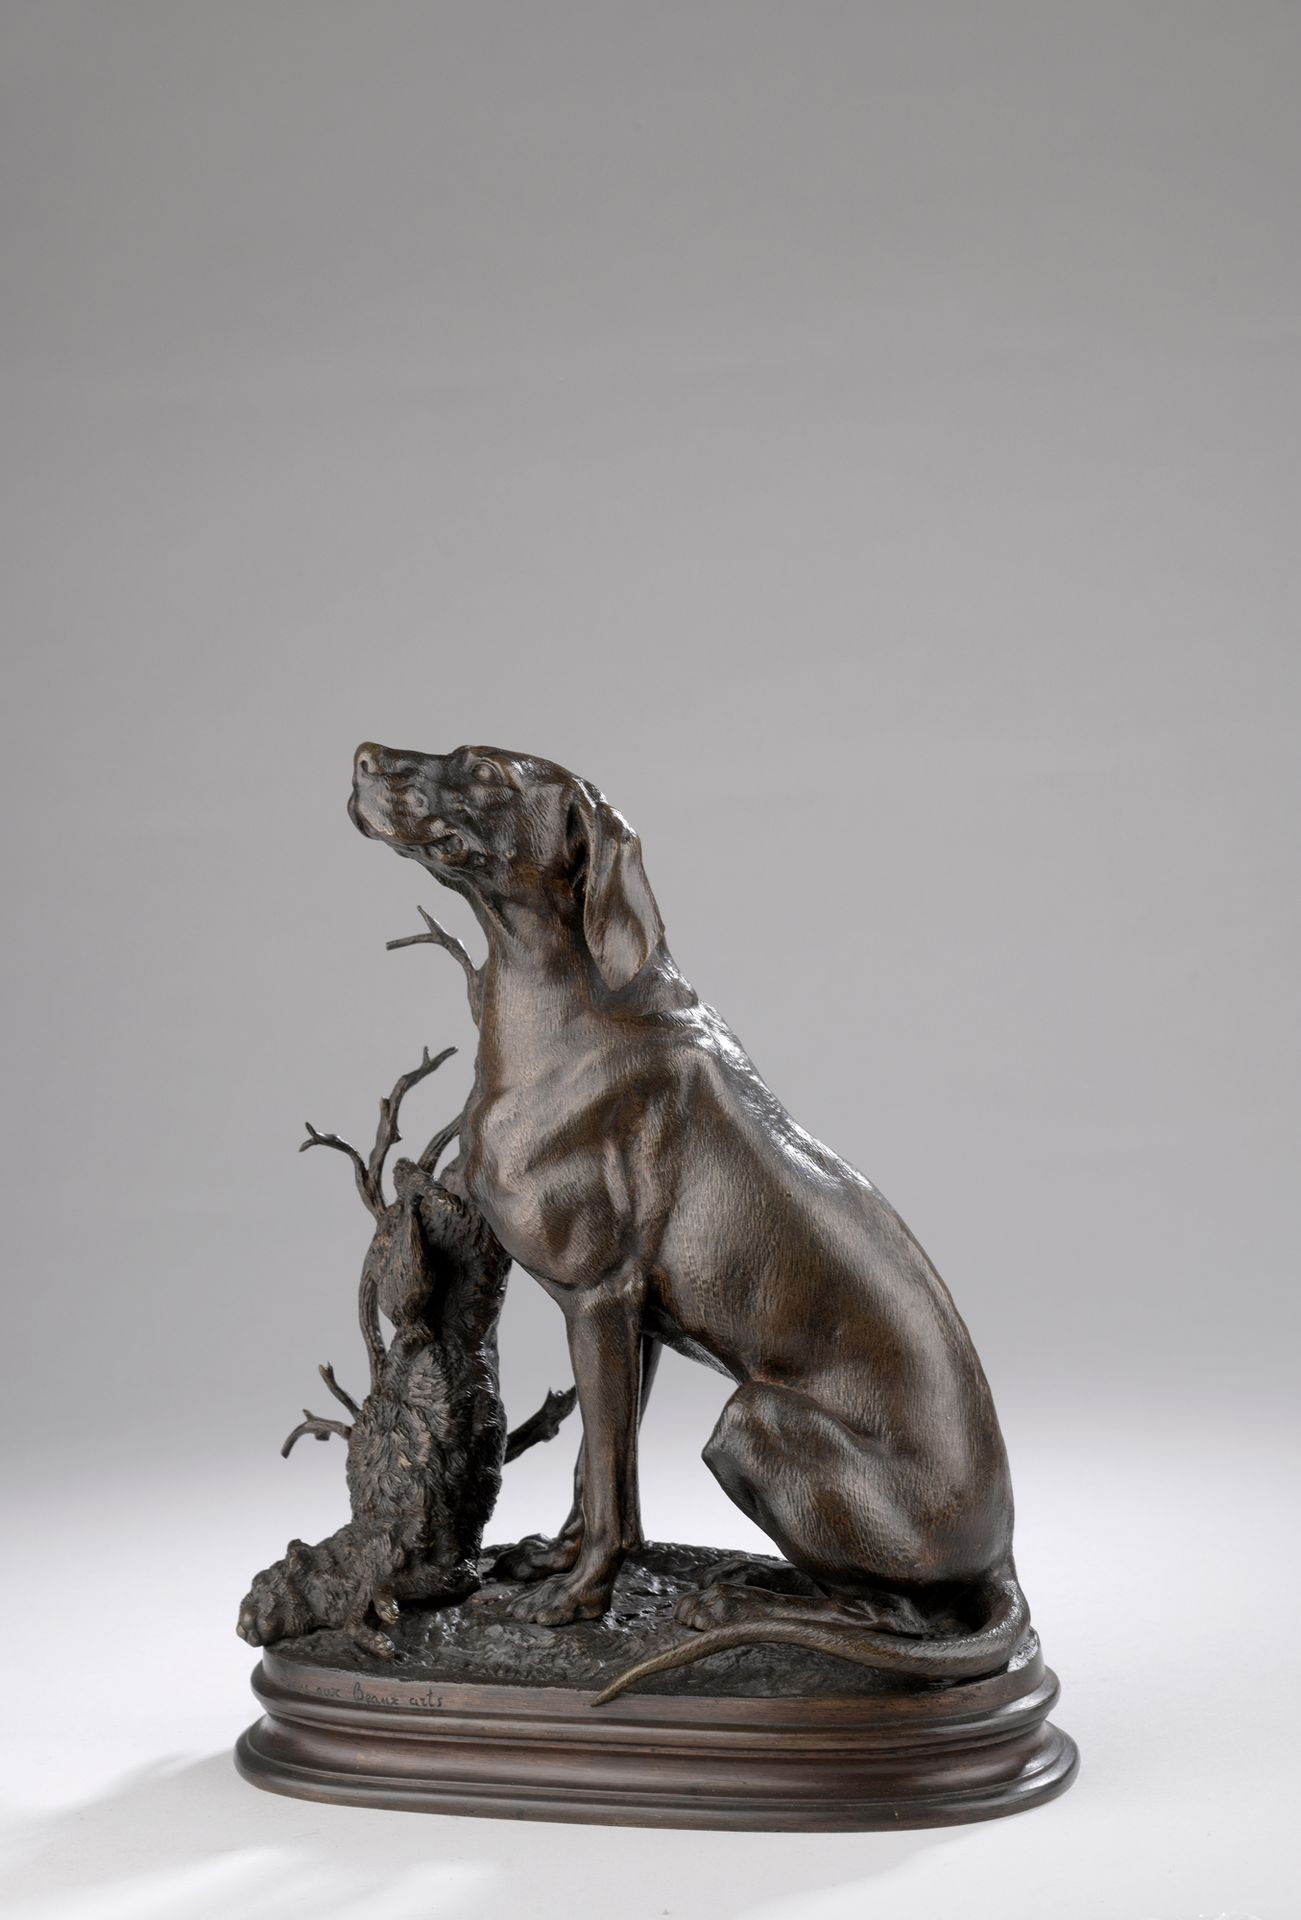 Null 费迪南-鲍特罗(1832-1874)

狗与野兔

带有棕色铜锈的青铜器

签名 "F. PAUTROT "在露台上

铭文中写道："被录取到美术学院&hellip;